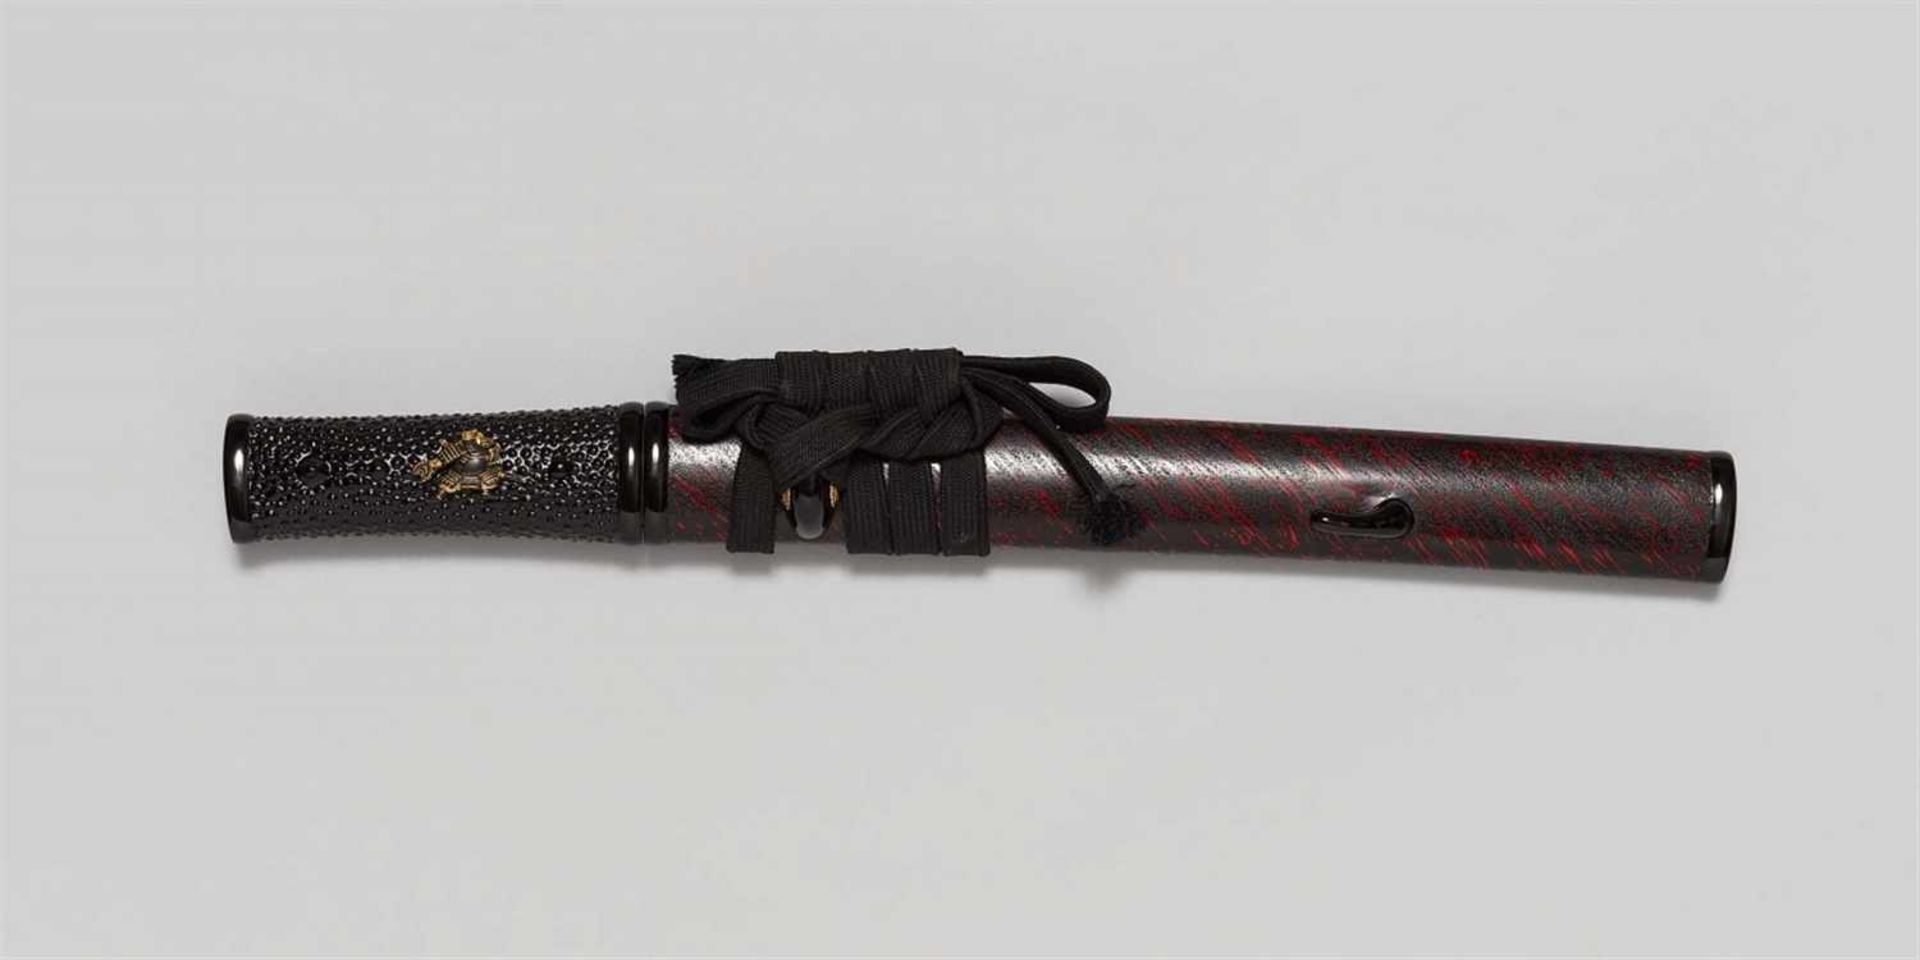 Tantô. Datiert 1869Klinge: L 23 cm, moroha zukuri, ko-itame hada, gunume-midare hamon, die Rückseite - Bild 2 aus 2